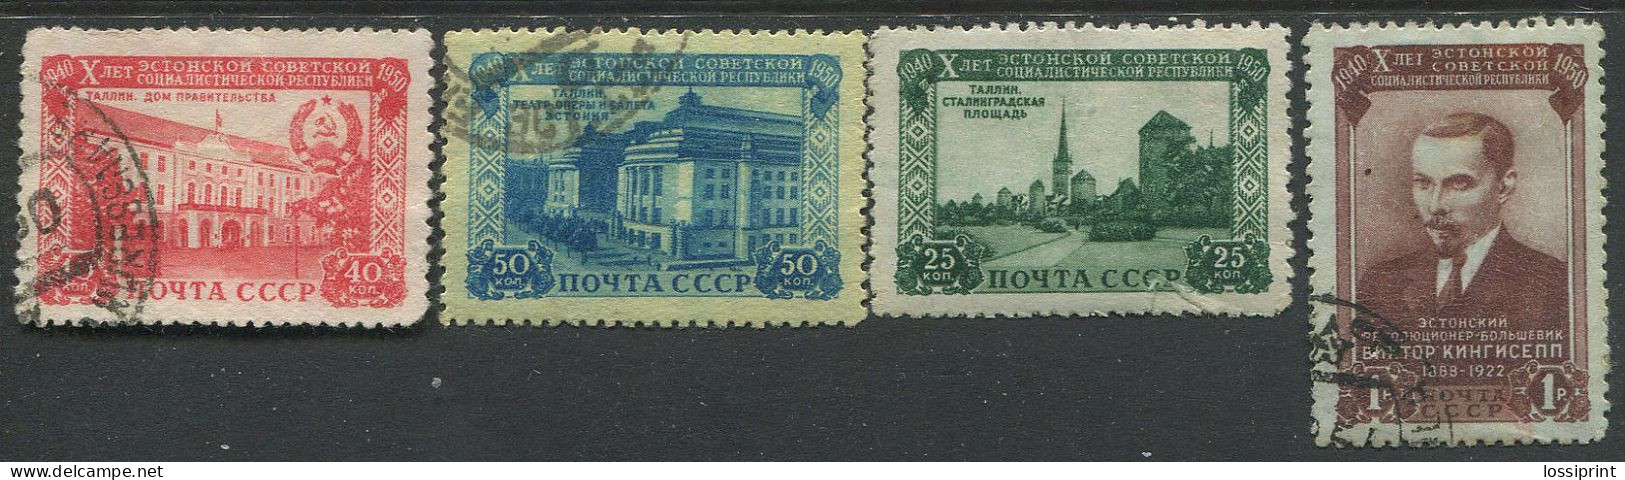 Russia:Estonia:Used Stamps Serie X Years Estonia, V.Kingissepp, Theatre, Street, 1950 - Oblitérés